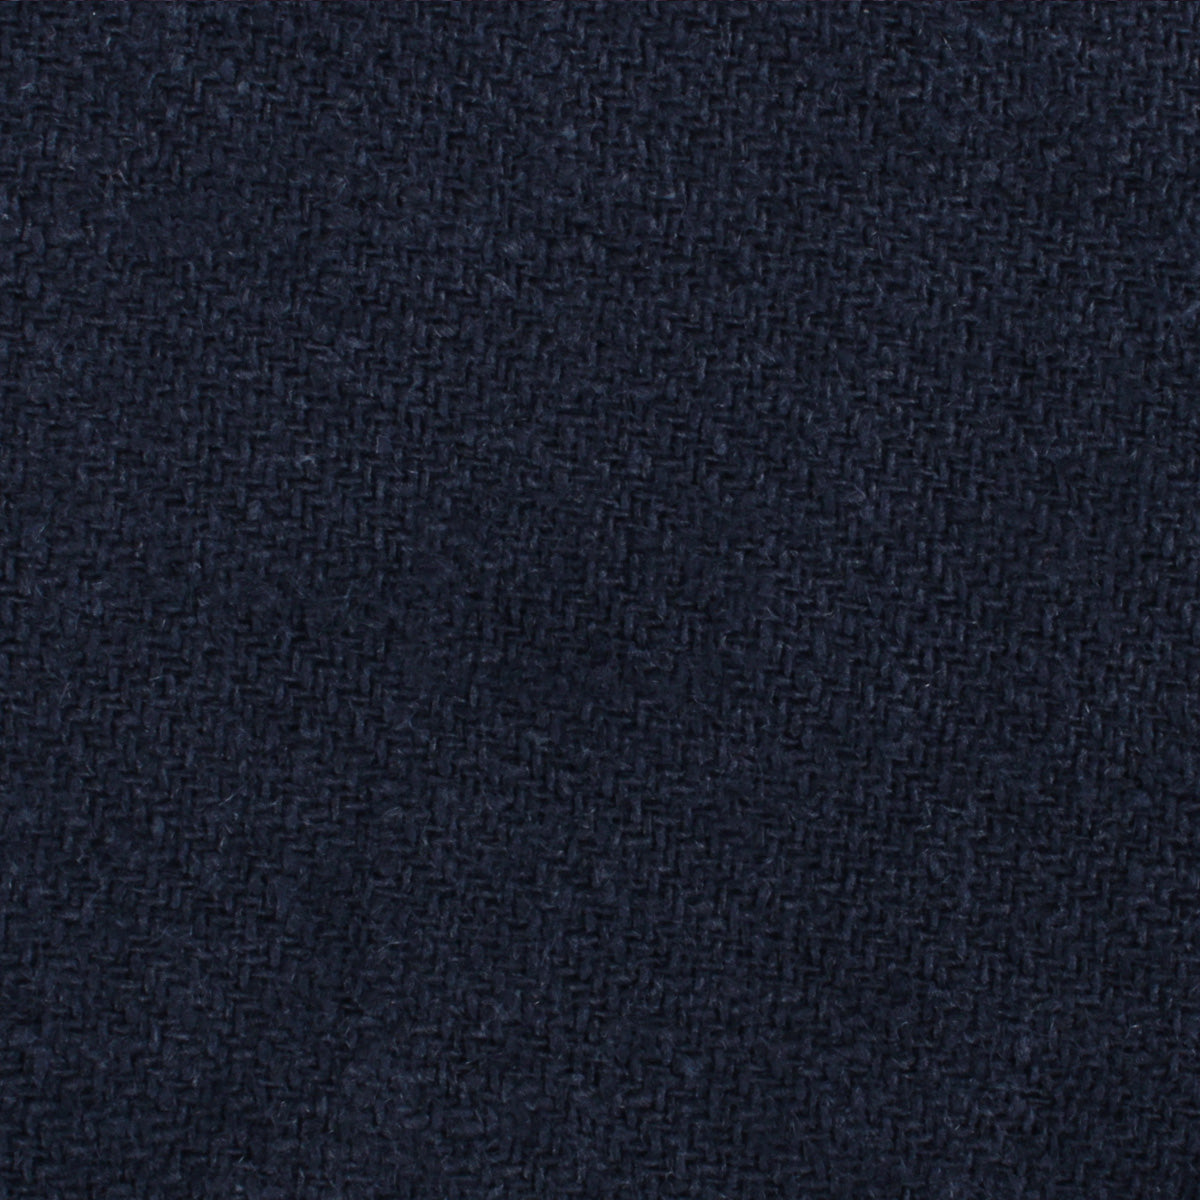 Midnight Blue-Black Linen Bow Tie Fabric